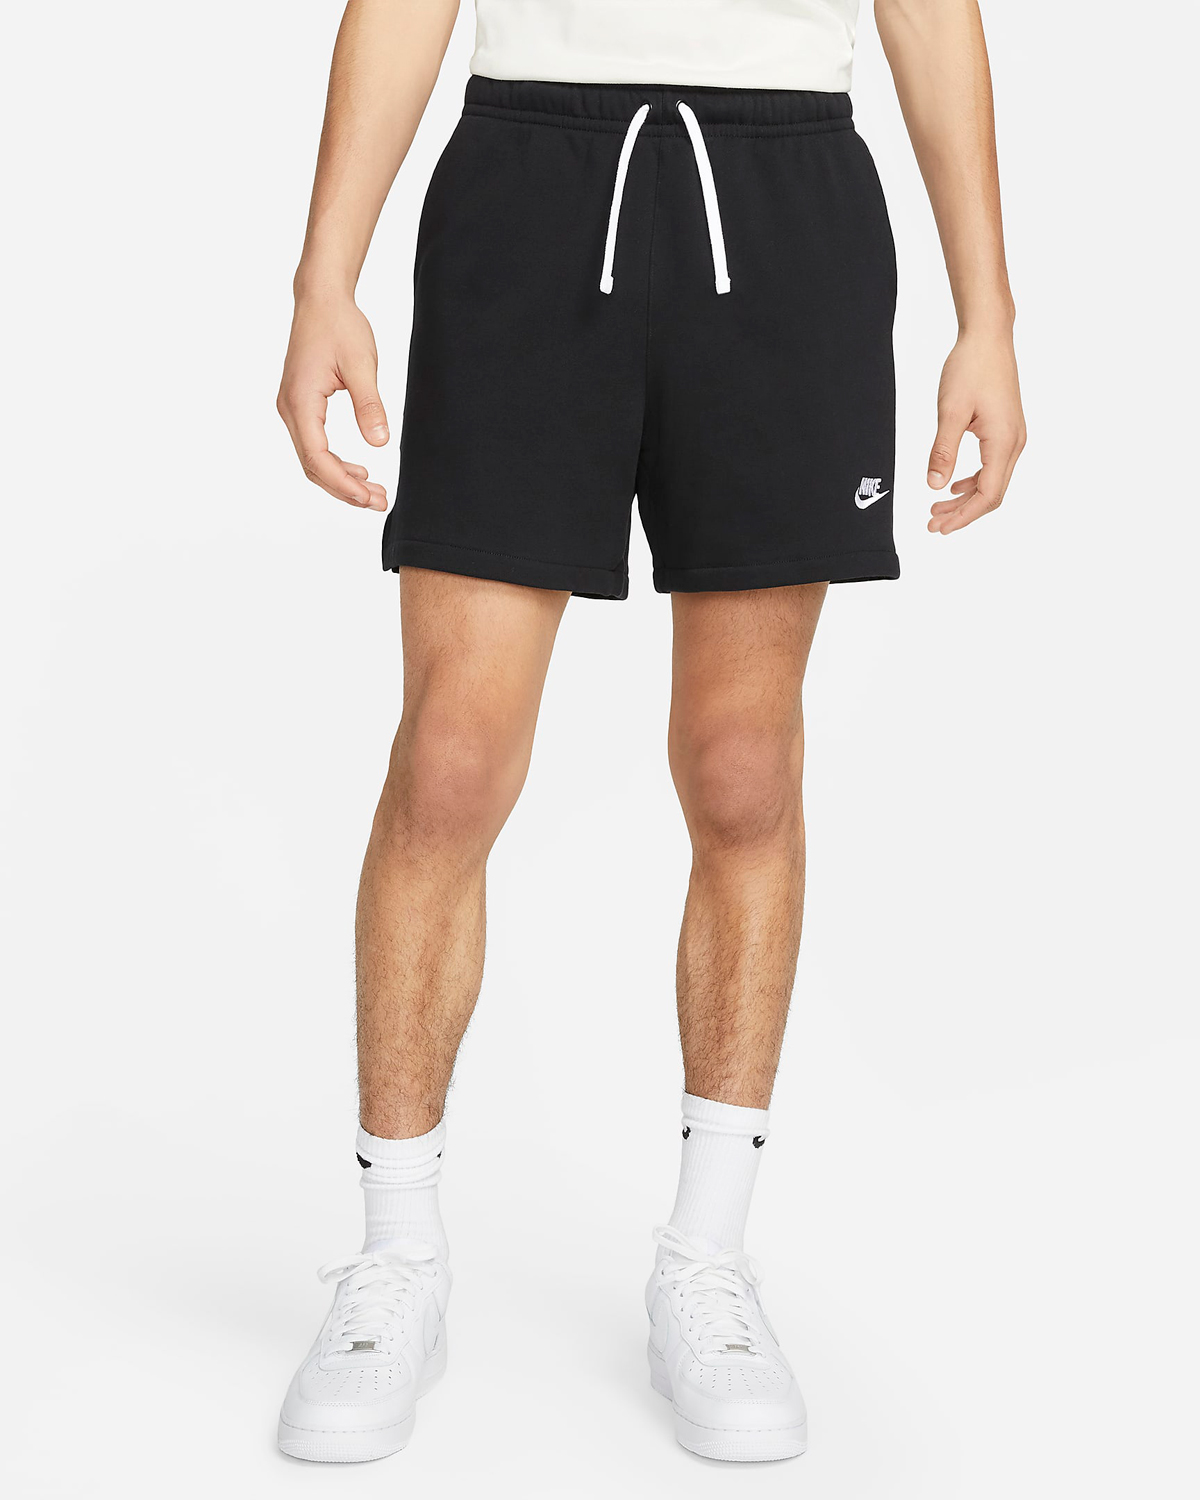 Nike-Club-Fleece-Flow-Shorts-Black-White